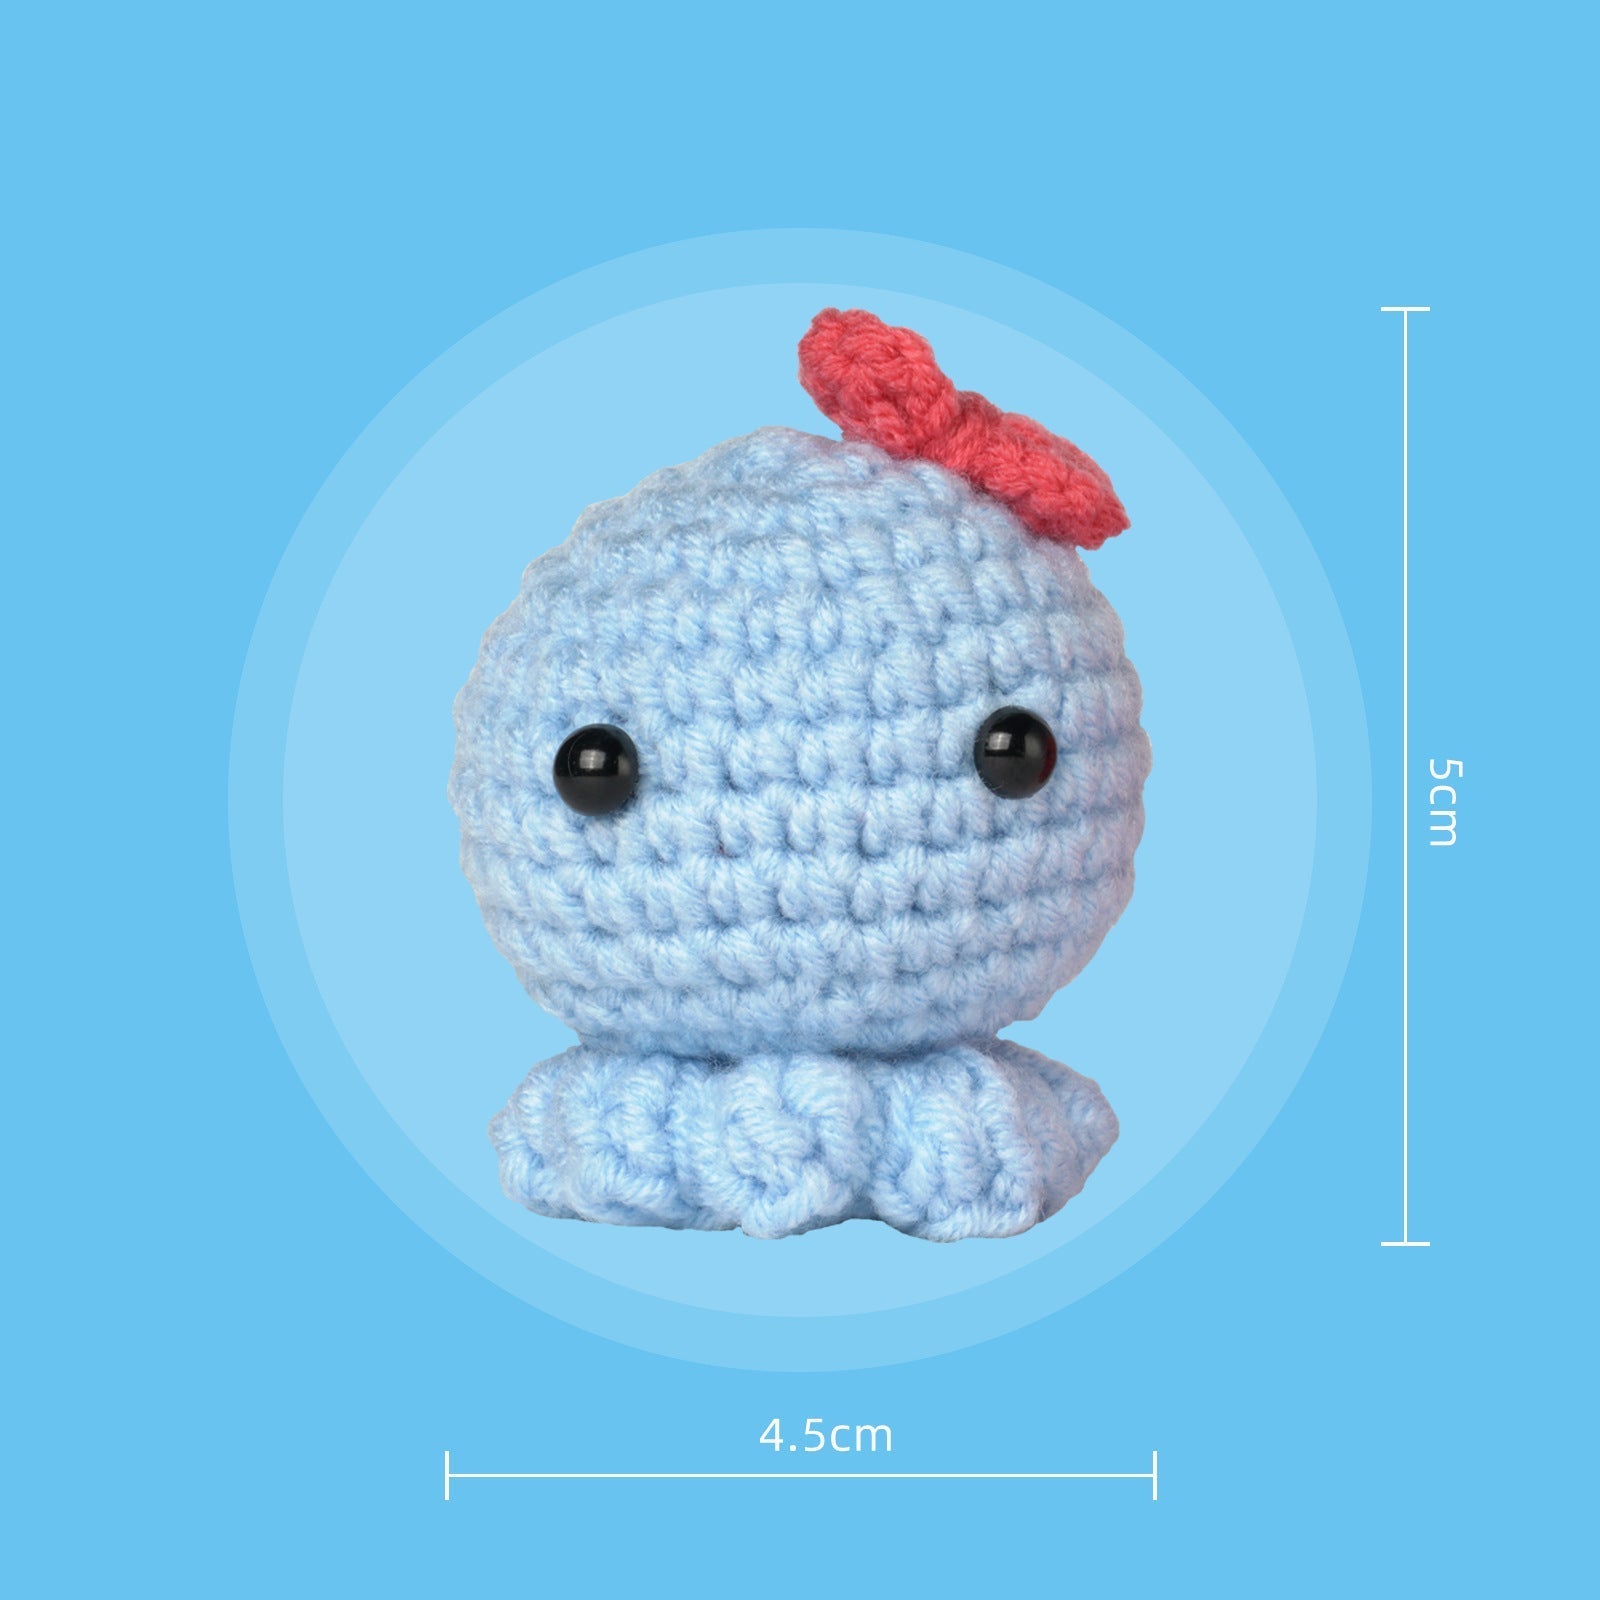 Mewaii Crochet Animals For Beginners Crochet Kits with Easy Peasy Yarn